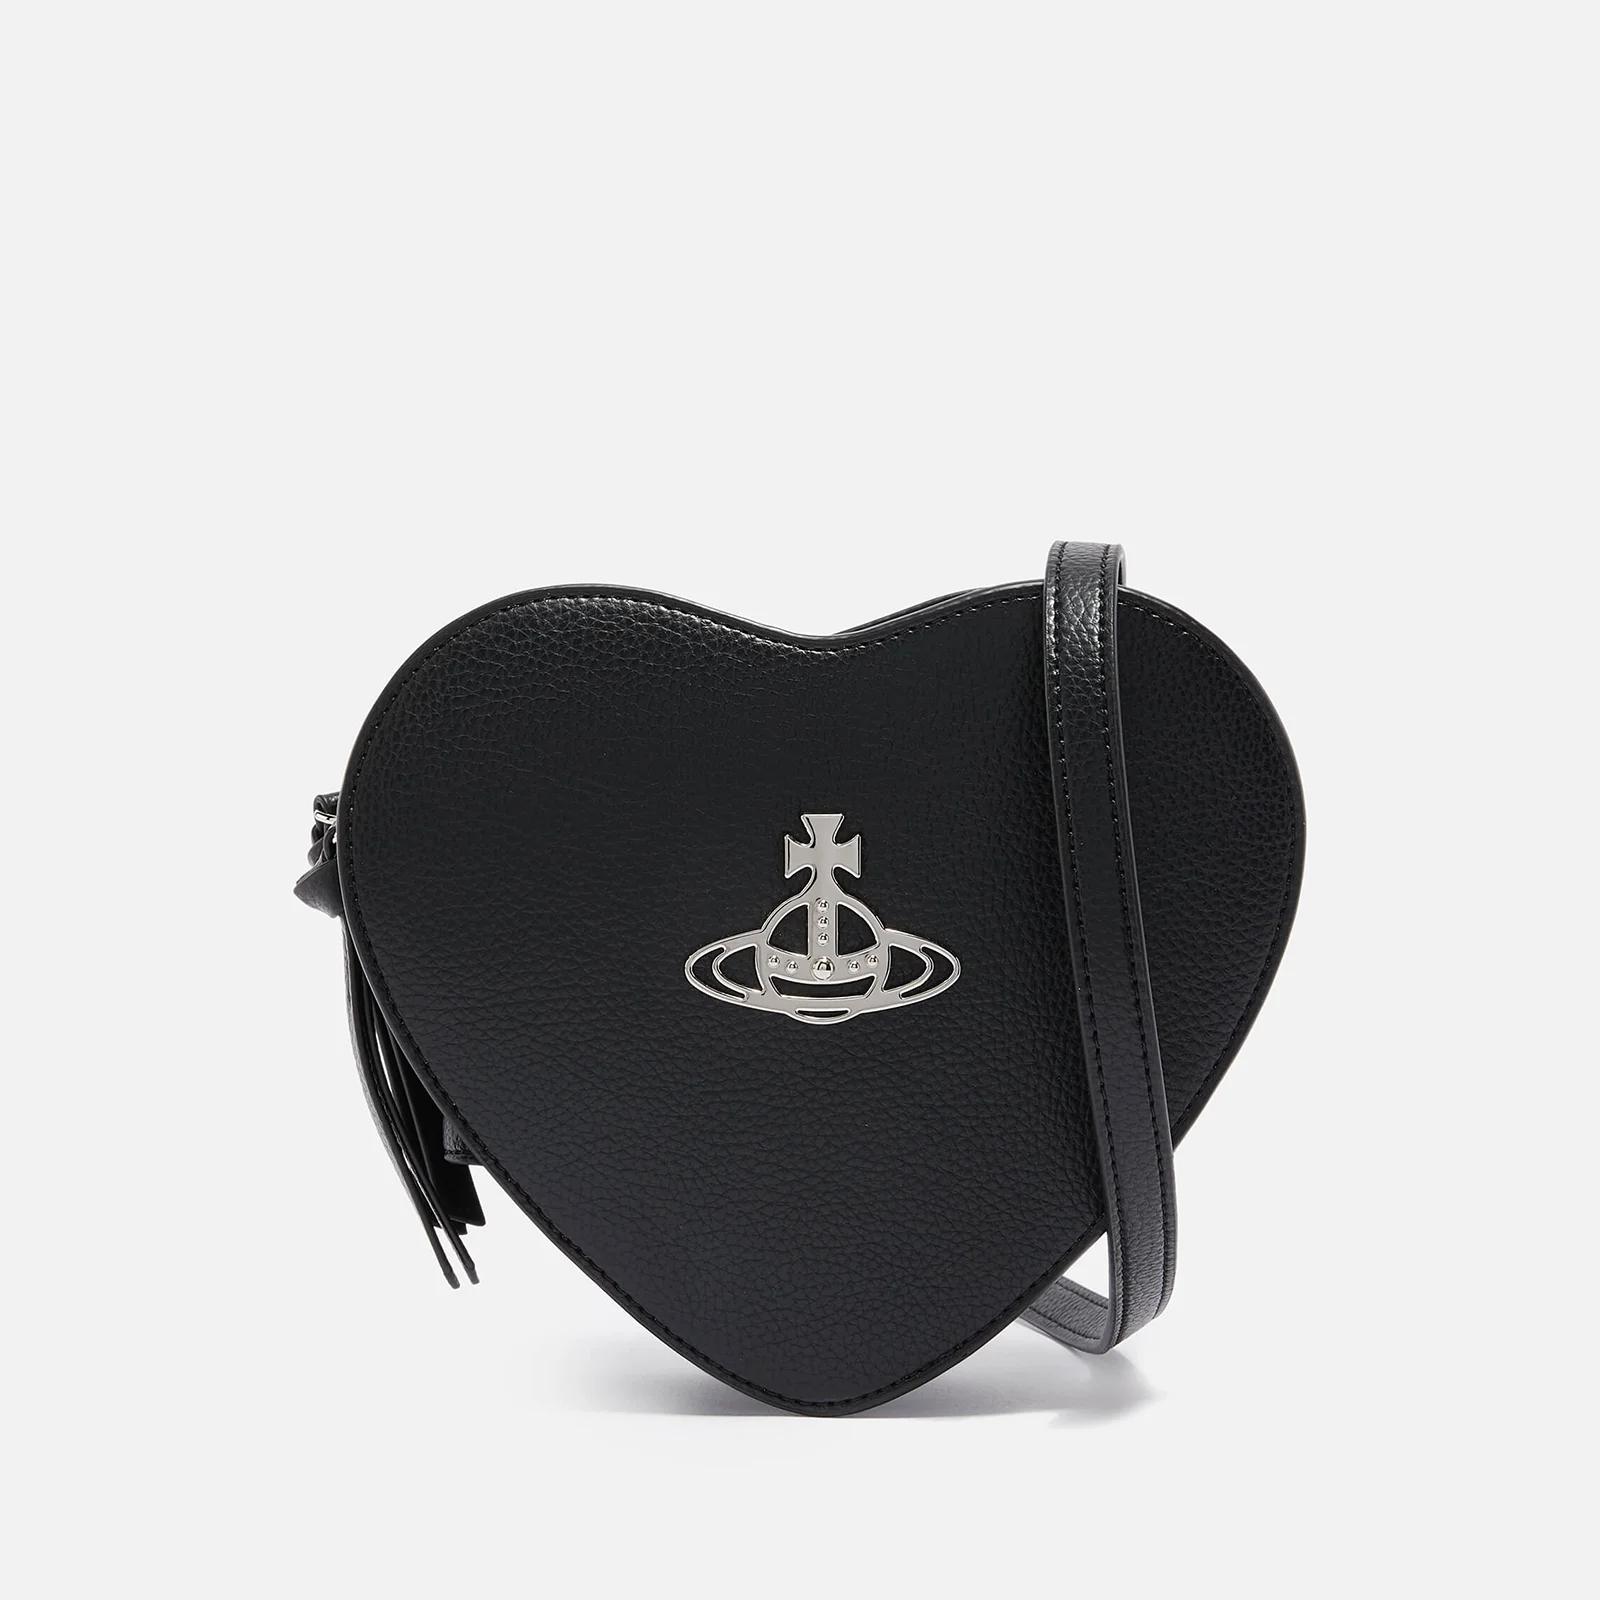 Vivienne Westwood Louise Vegan Leather Cross-Body Bag Image 1